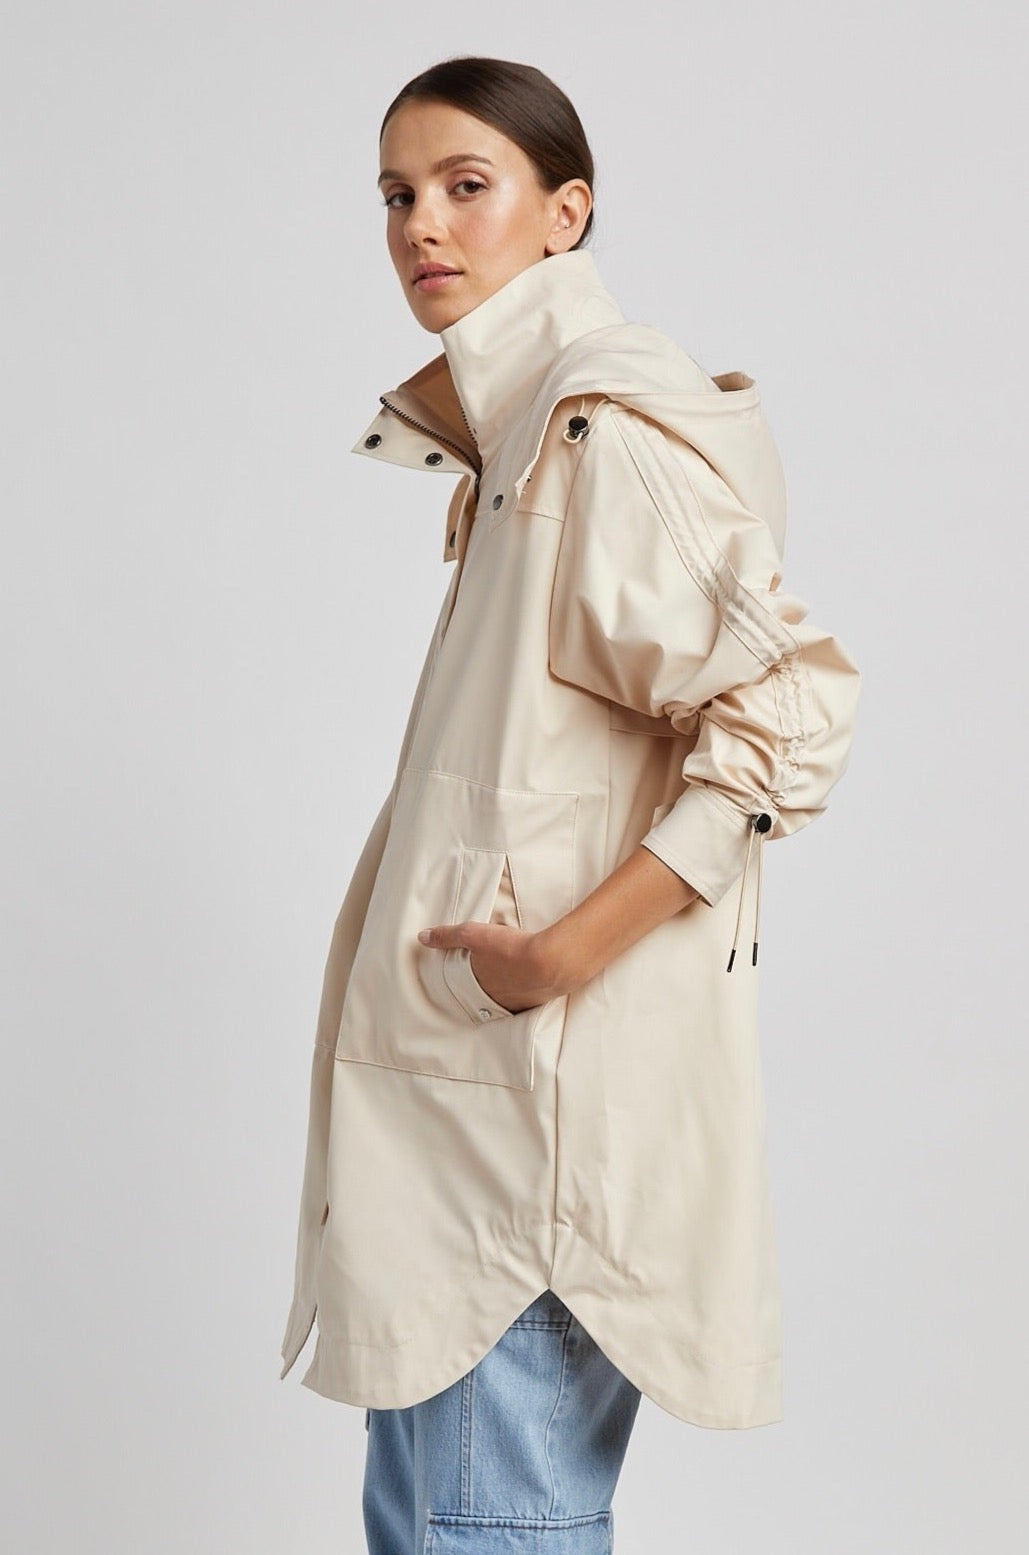 Adroit Atelier Ryan Water Repellent Rain Coat With Detachable Hood in Ivory